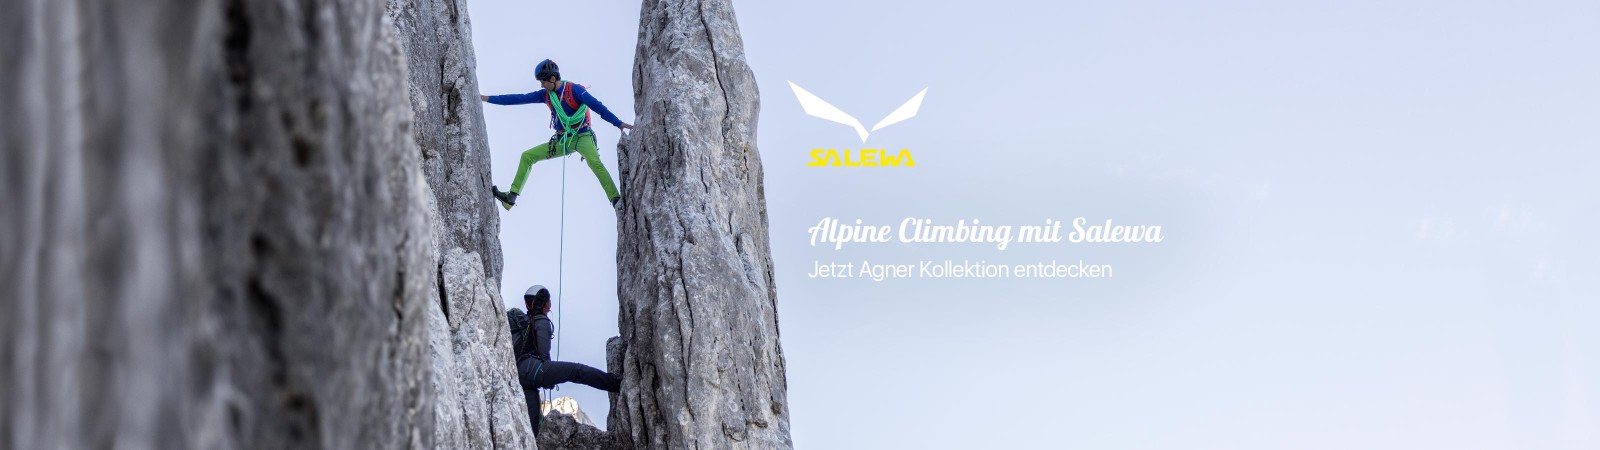 Alpine Climbing mit Salewa